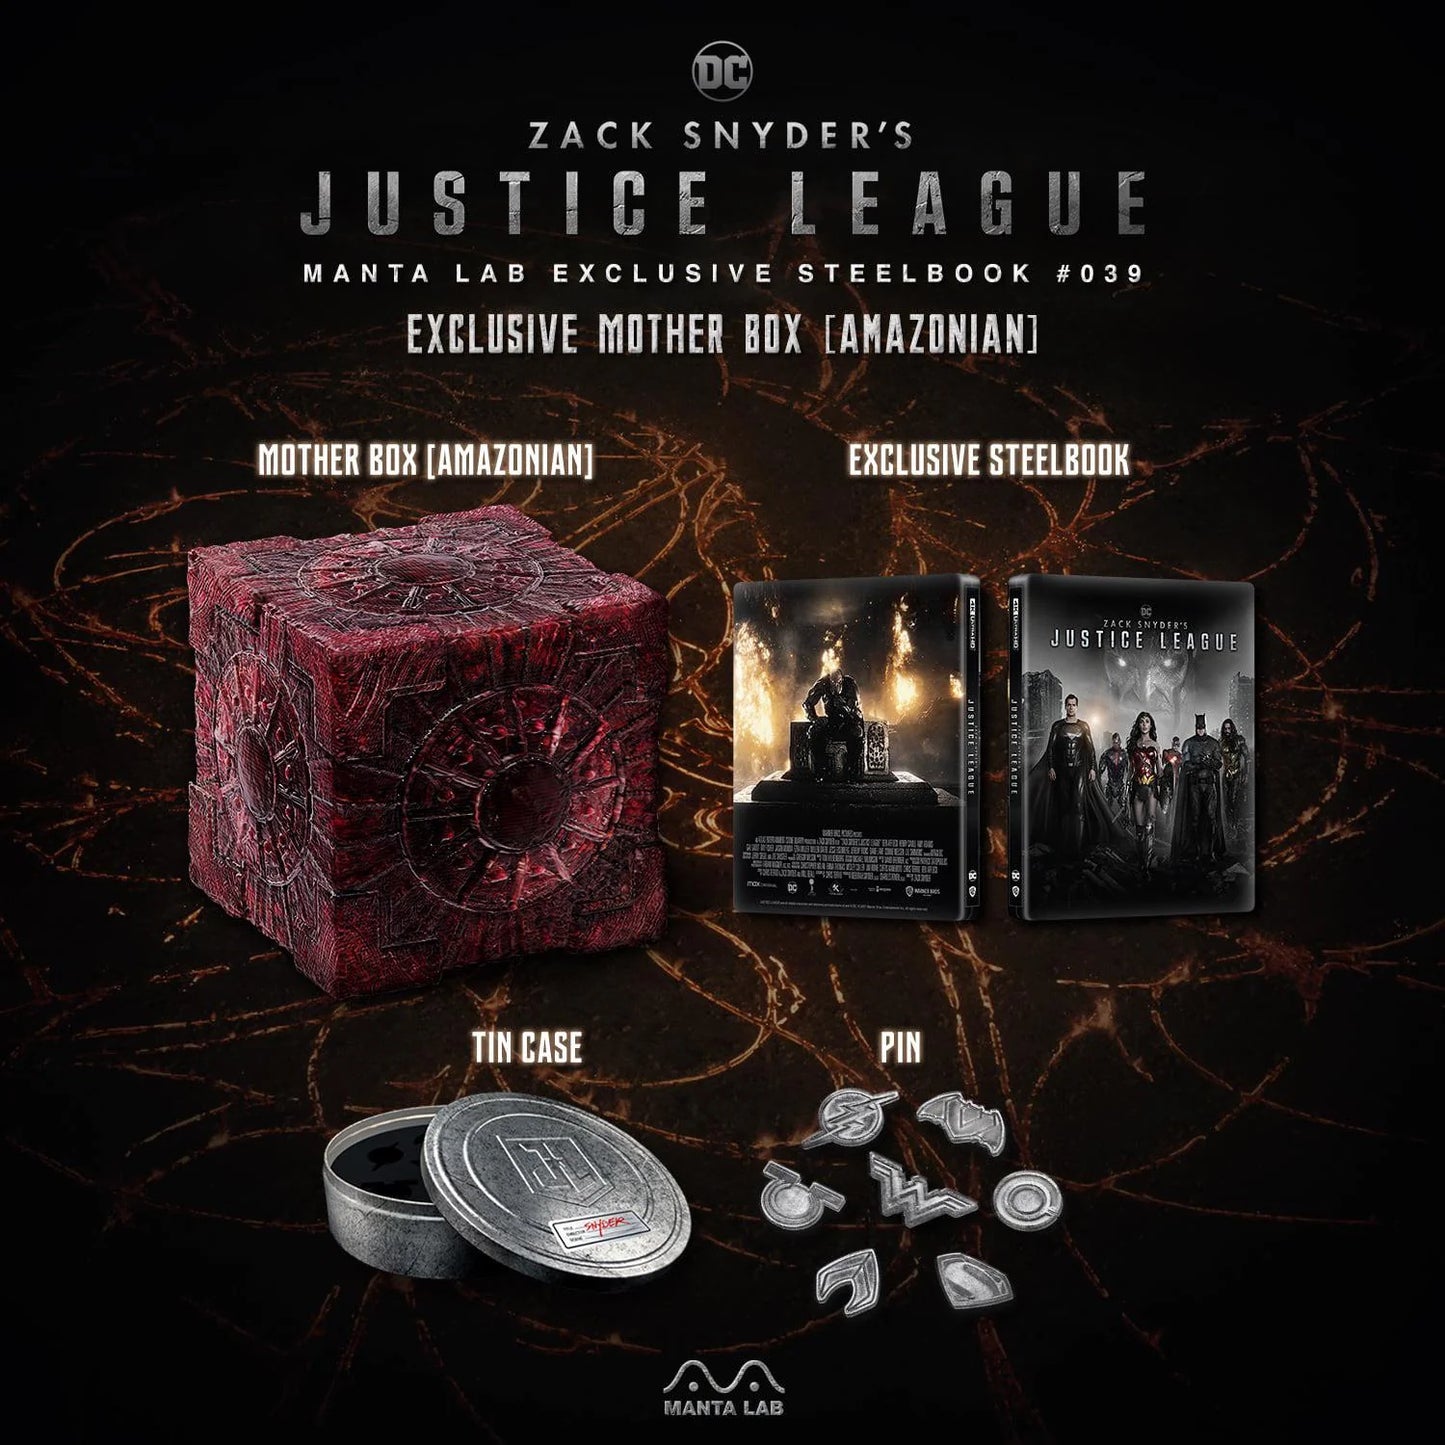 Manta Lab Zack Snyders Justice League 4K UHD Steelbook Mother Box (Amazonian)